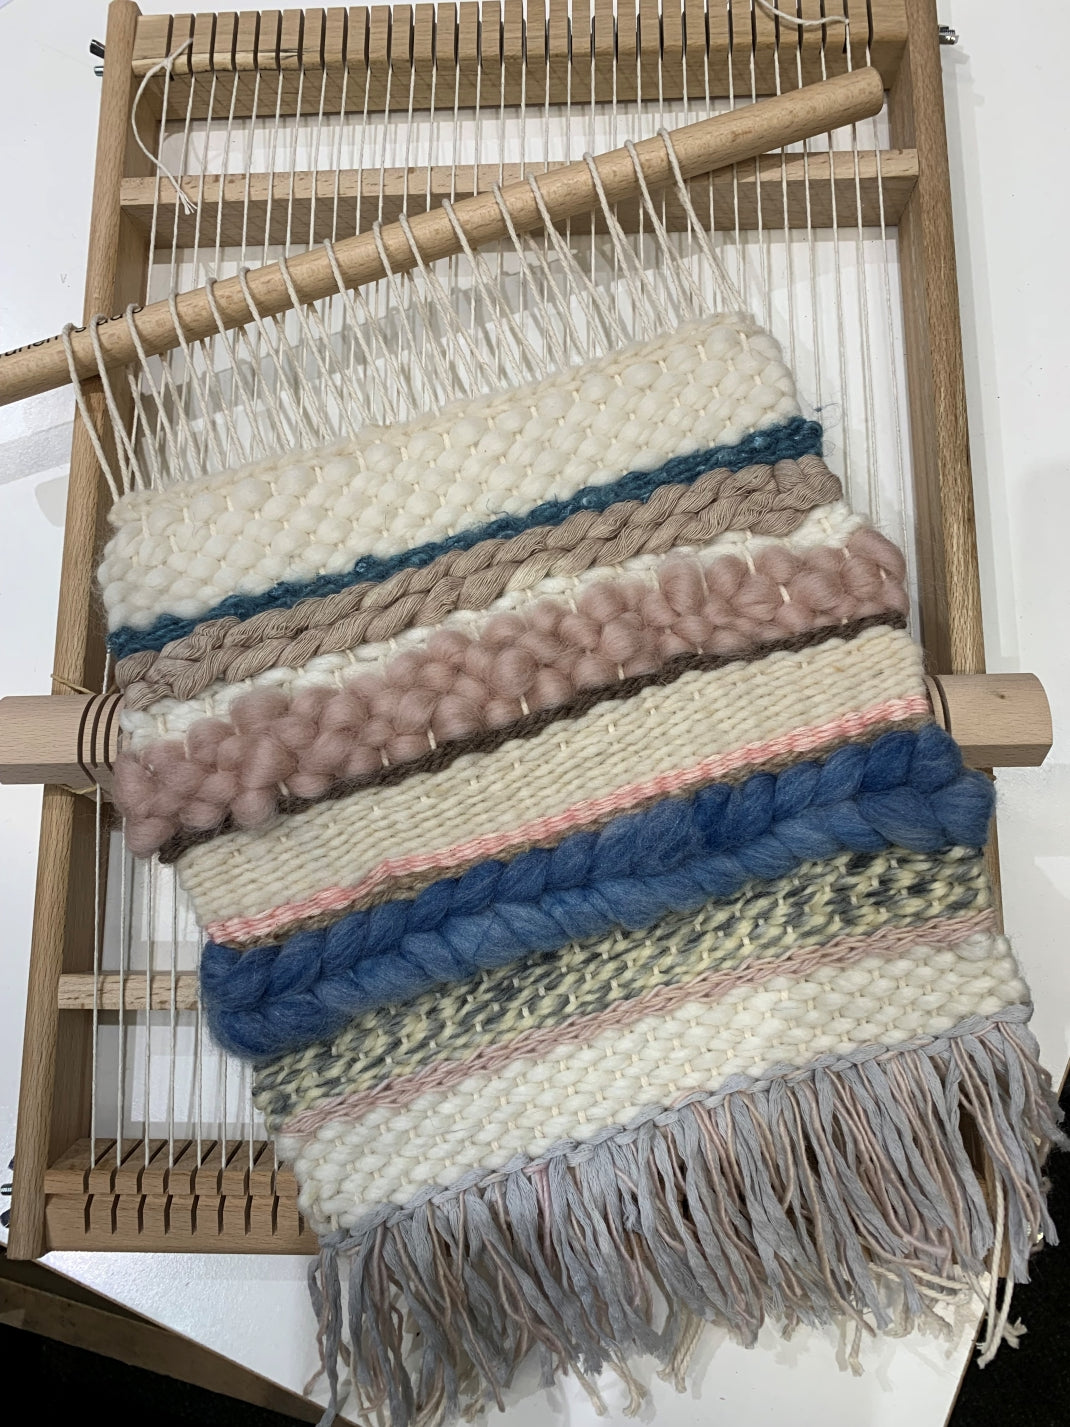 Creation Tapestry Weaving Warp Yarn:: The Art of Tapestry Weaving See more